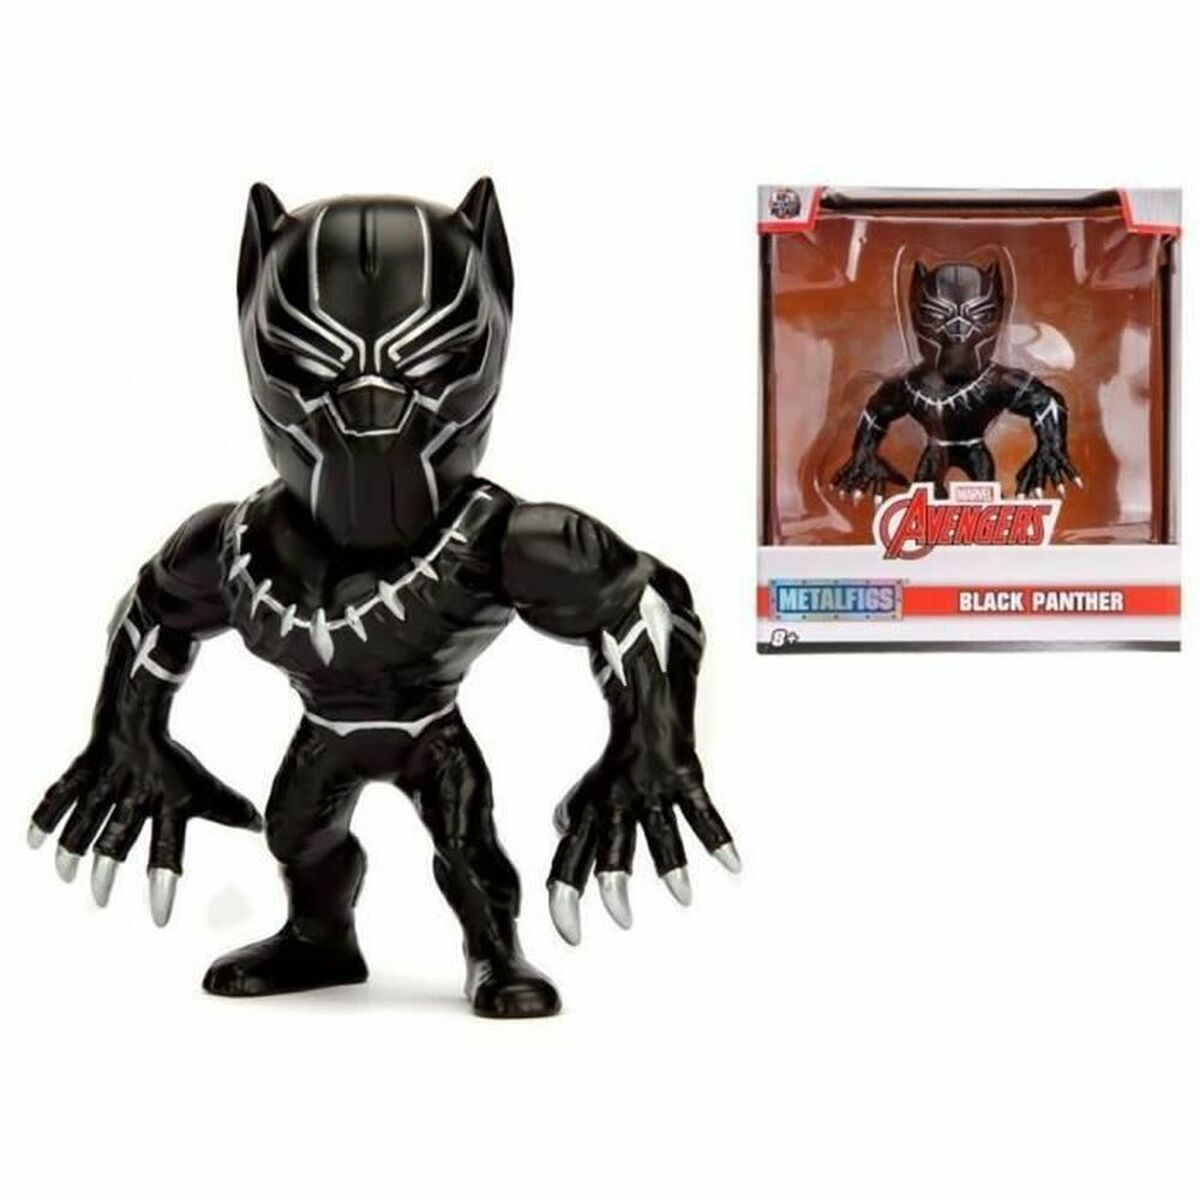 Statua The Avengers Black Panther 10 cm